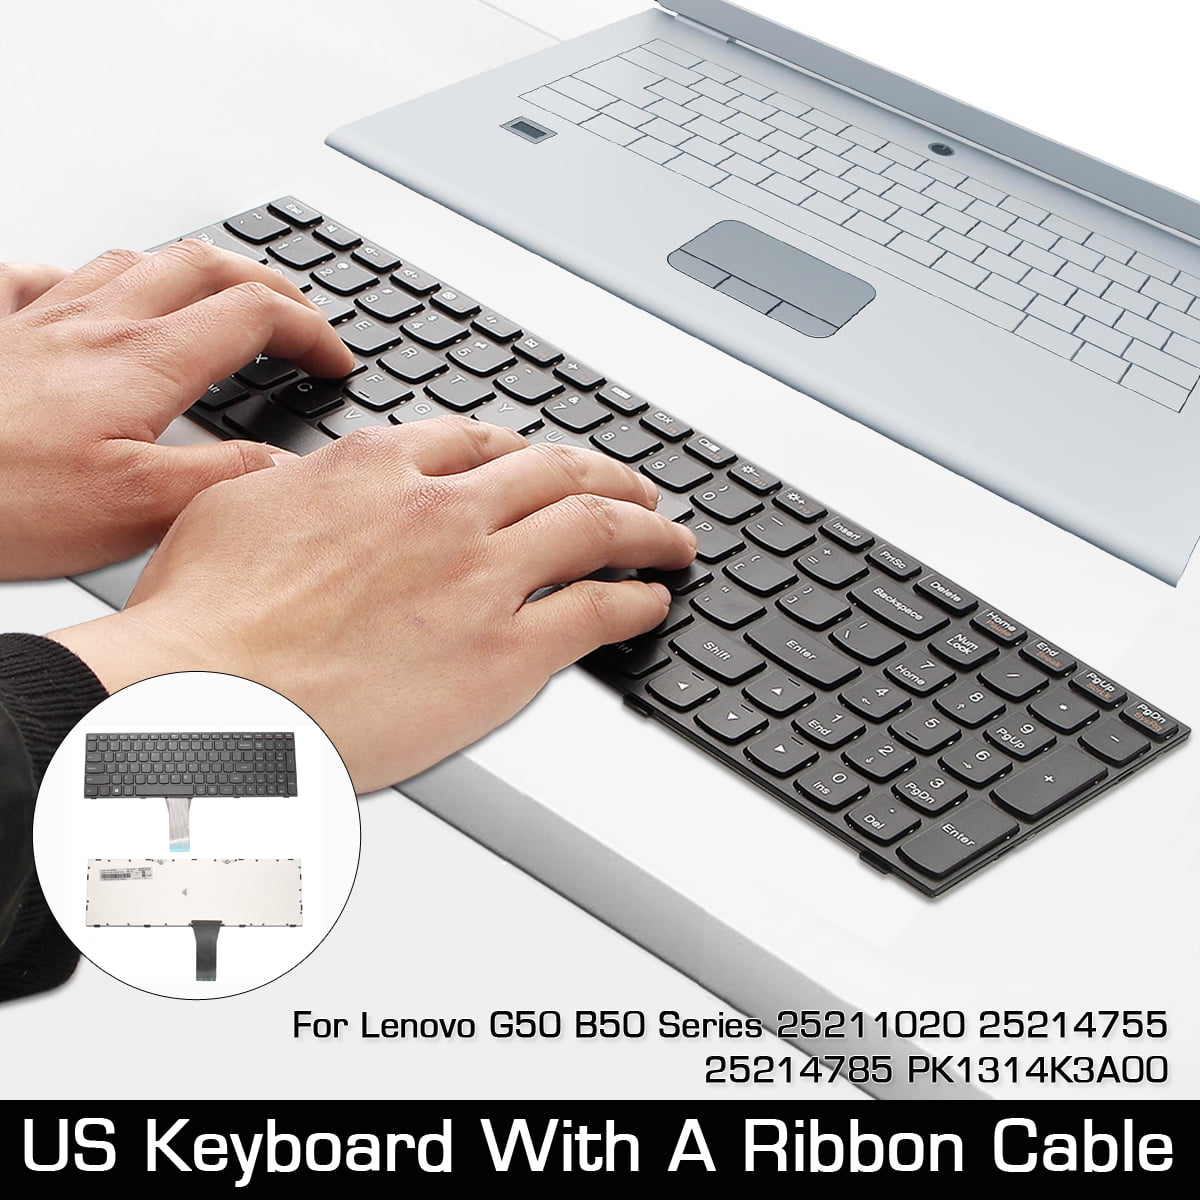 25214785 Lenovo G50 B50 Series US Keyboard 